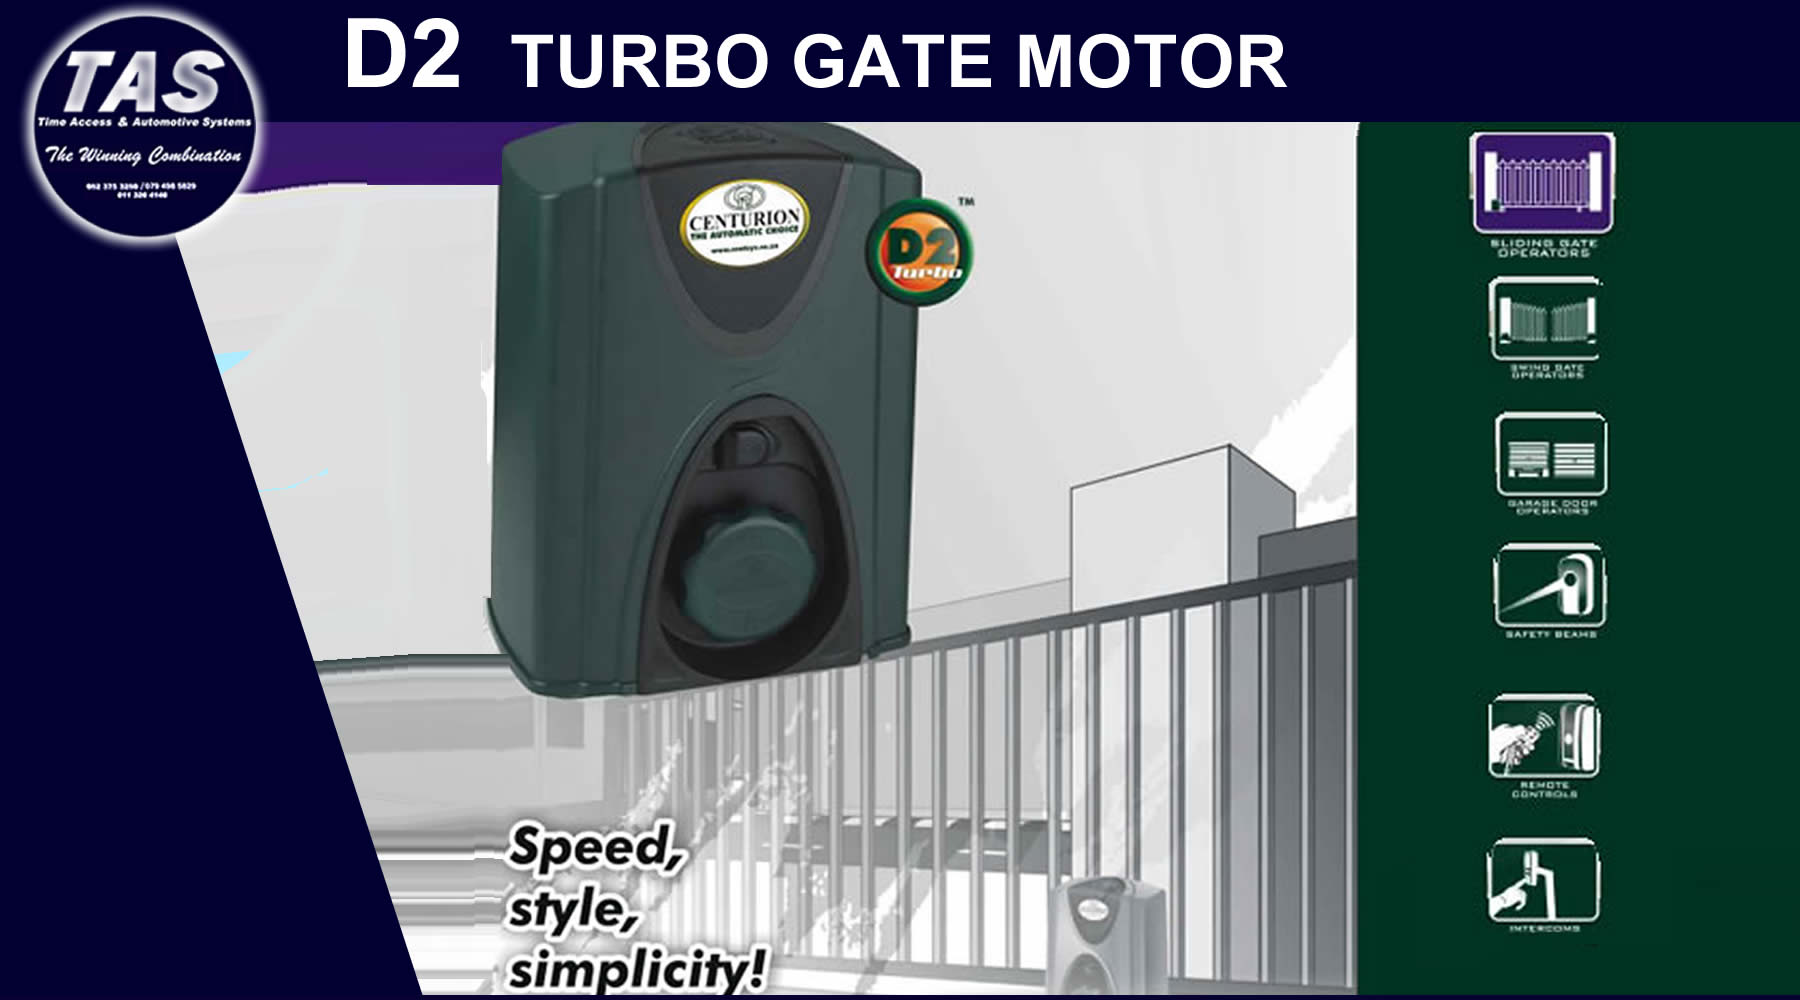 D2 turbo gate motors-security control banner